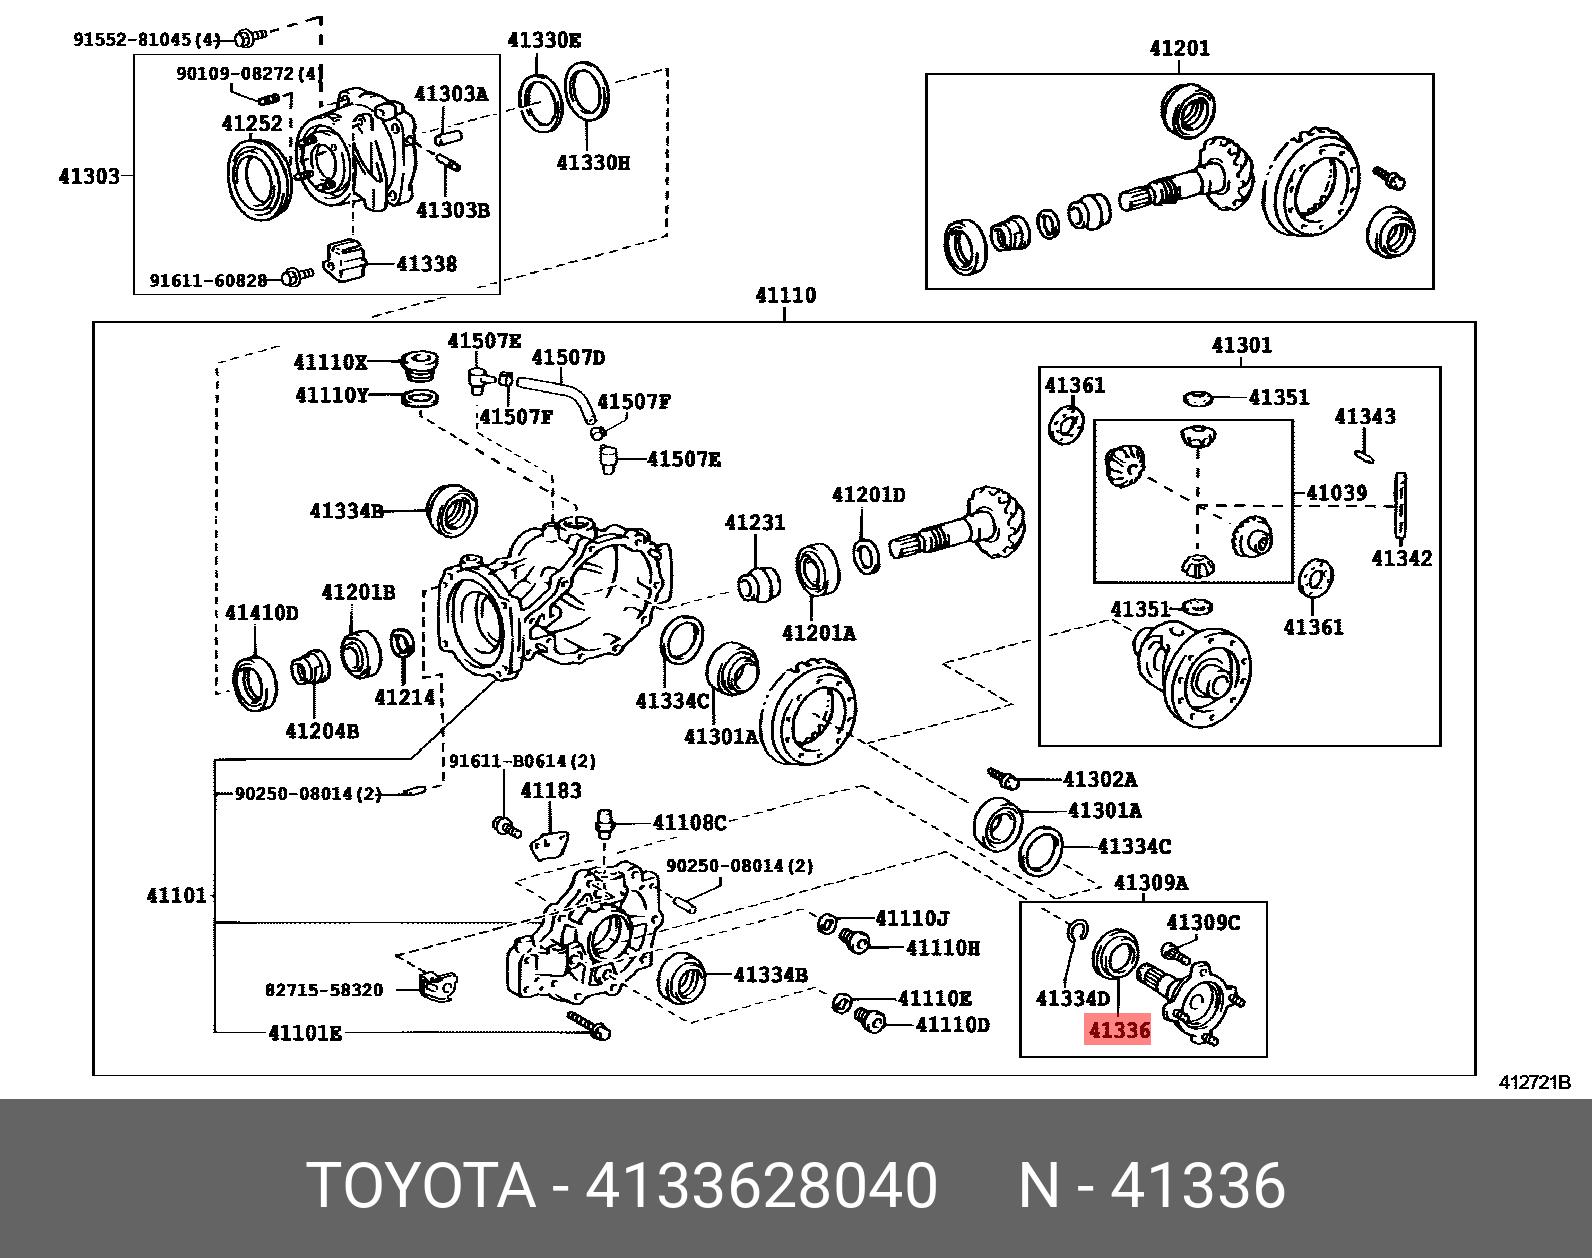 Пыльник фланца дифференциала - Toyota 41336-28040